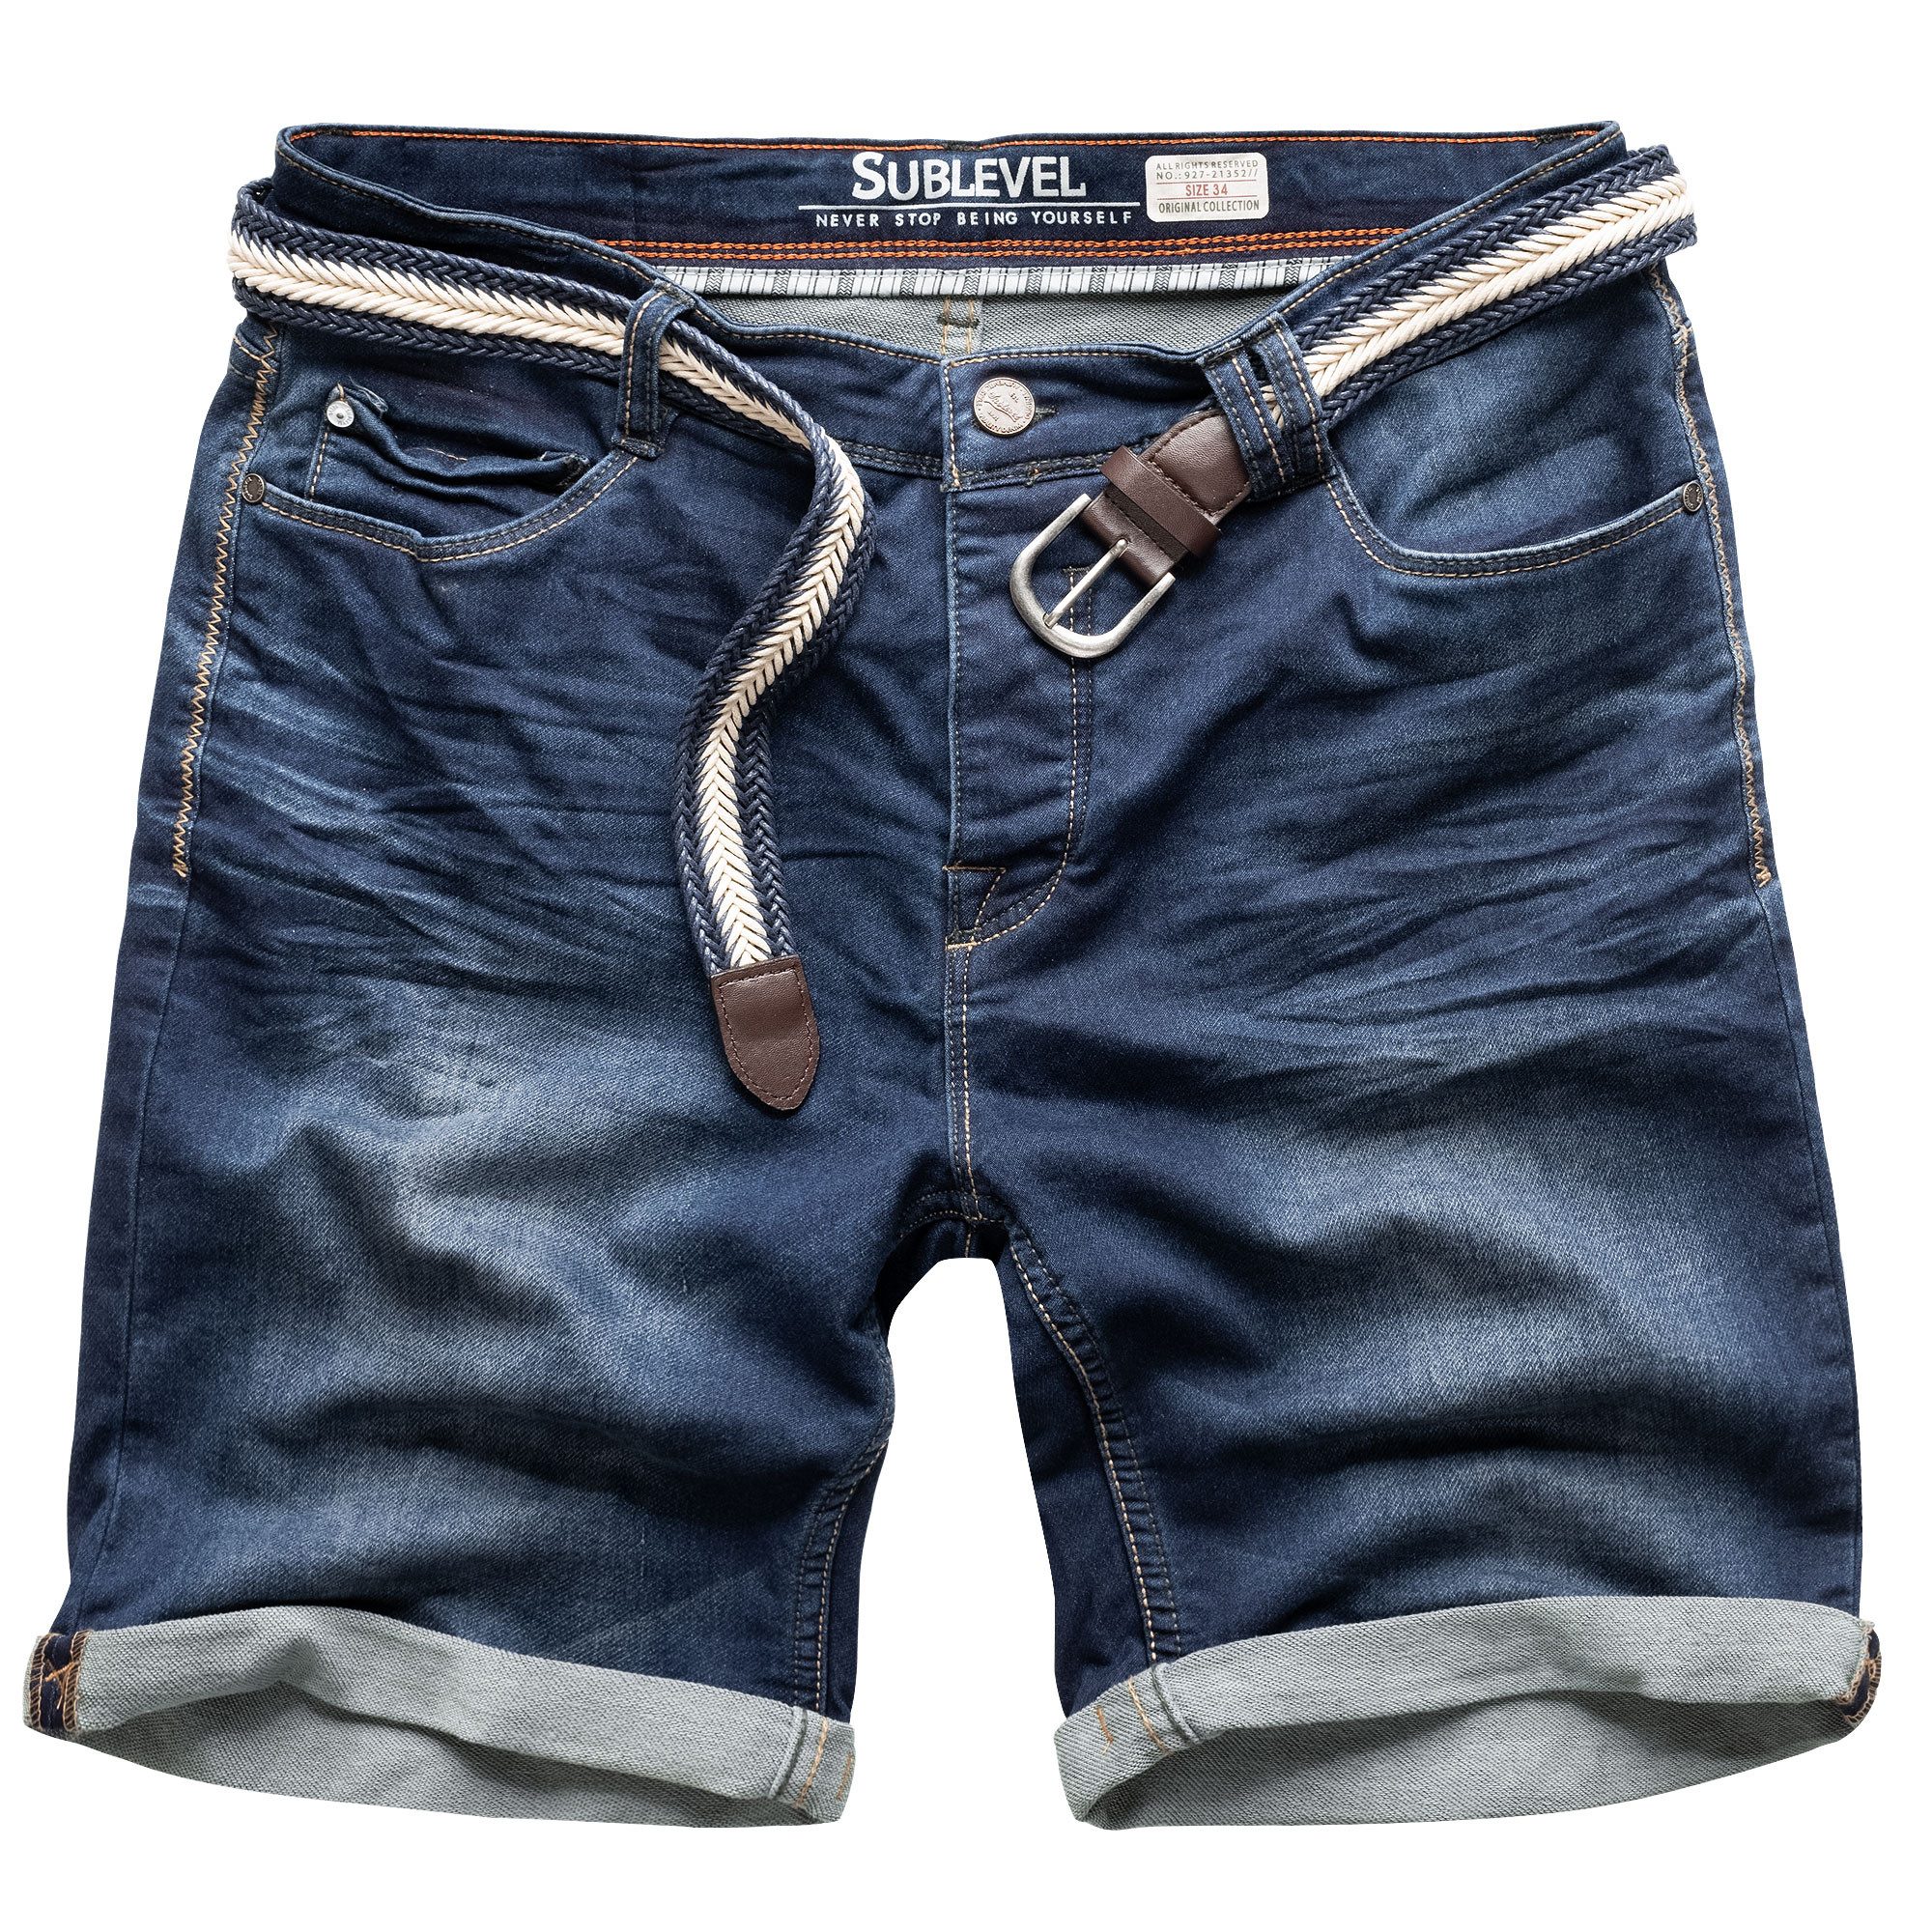 SUBLEVEL Shorts Sweat Shorts Jeans Kurze Hose Bermuda Sweatpant